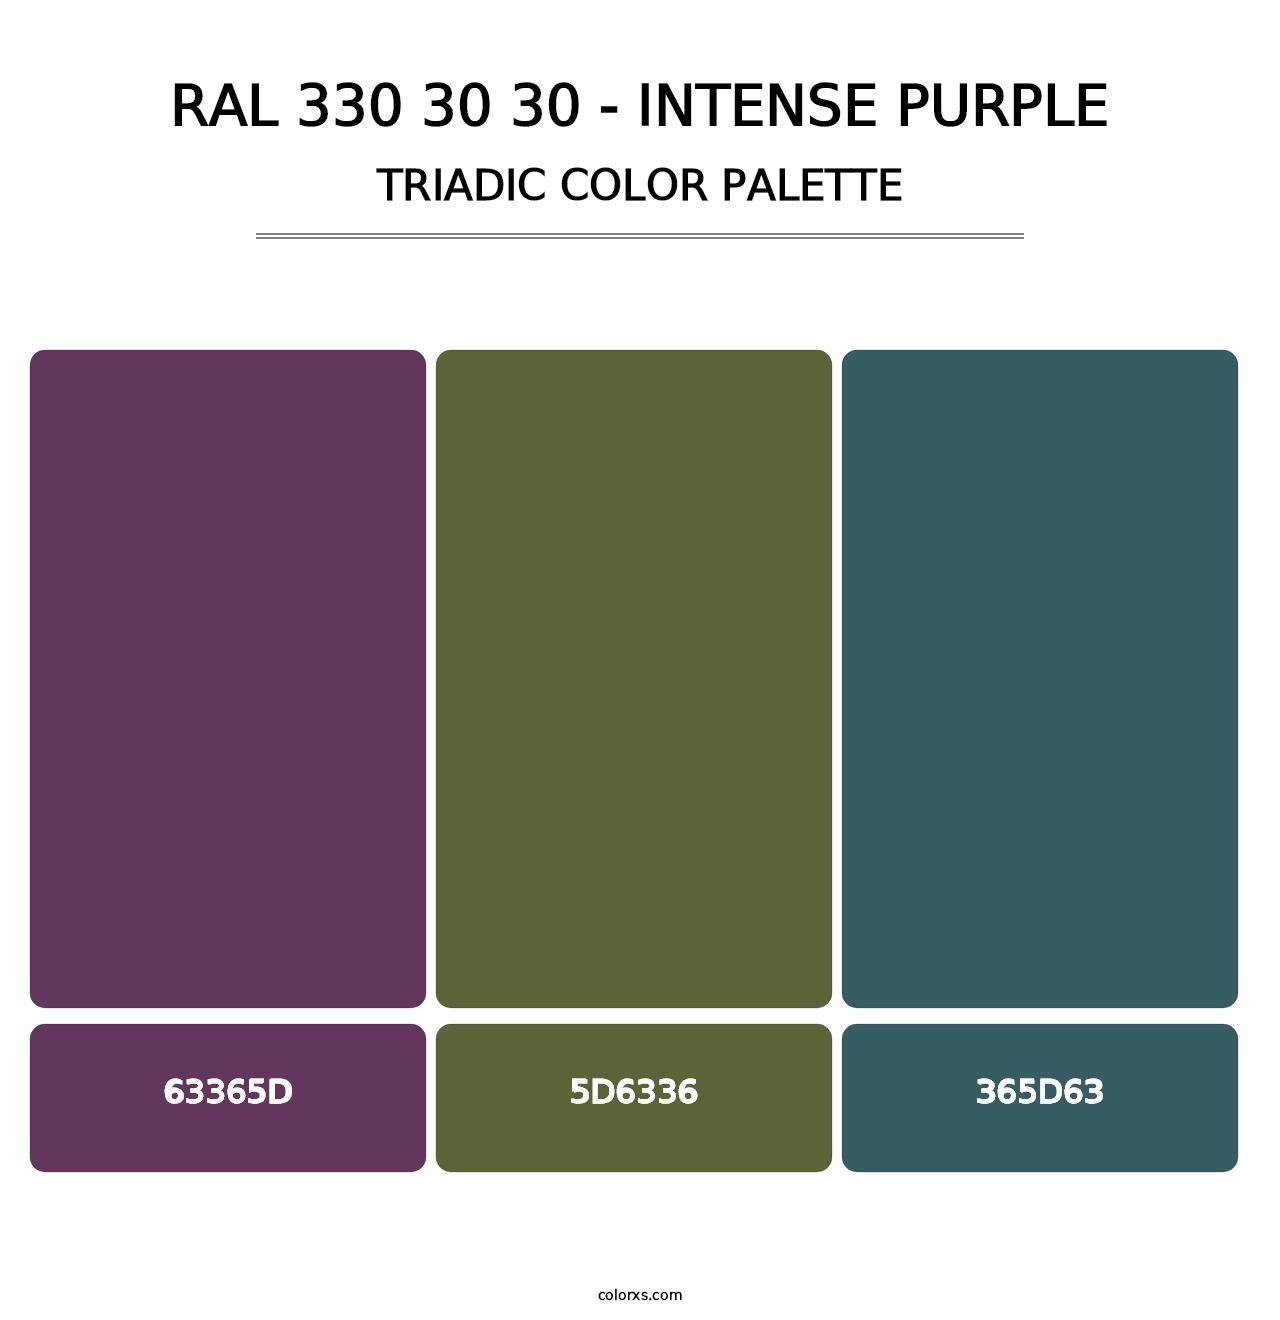 RAL 330 30 30 - Intense Purple - Triadic Color Palette